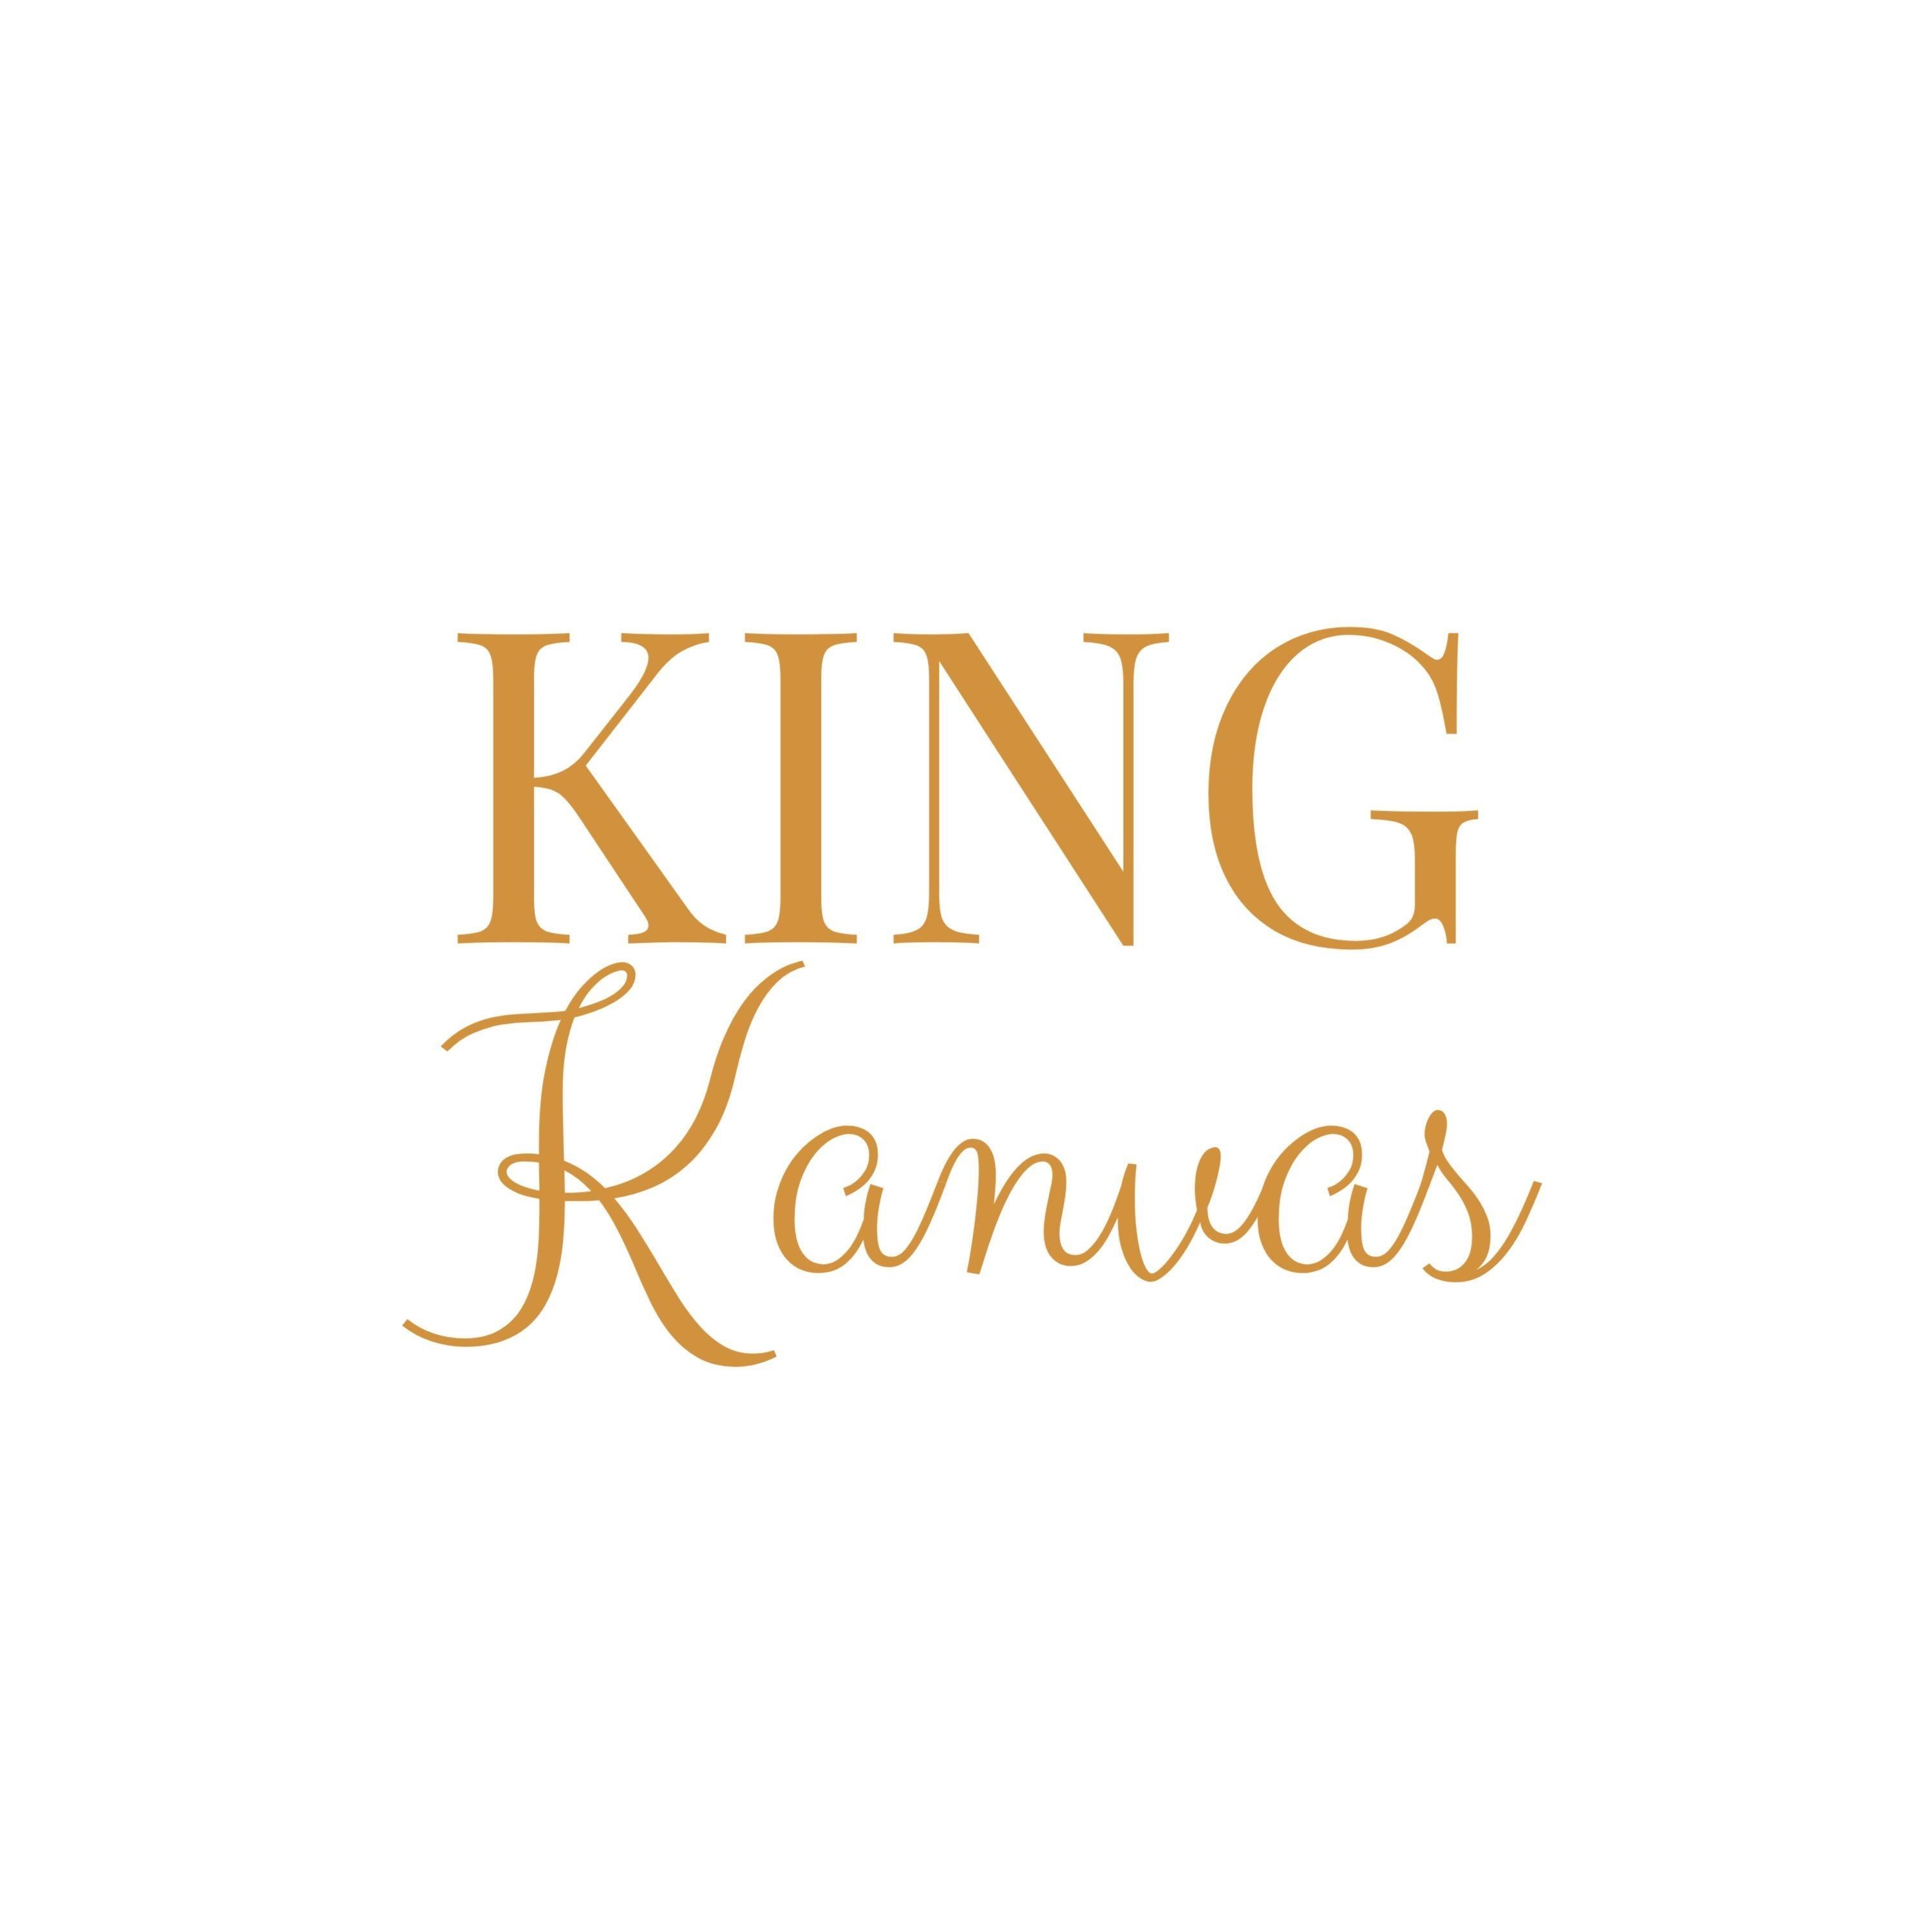 King Kanvas